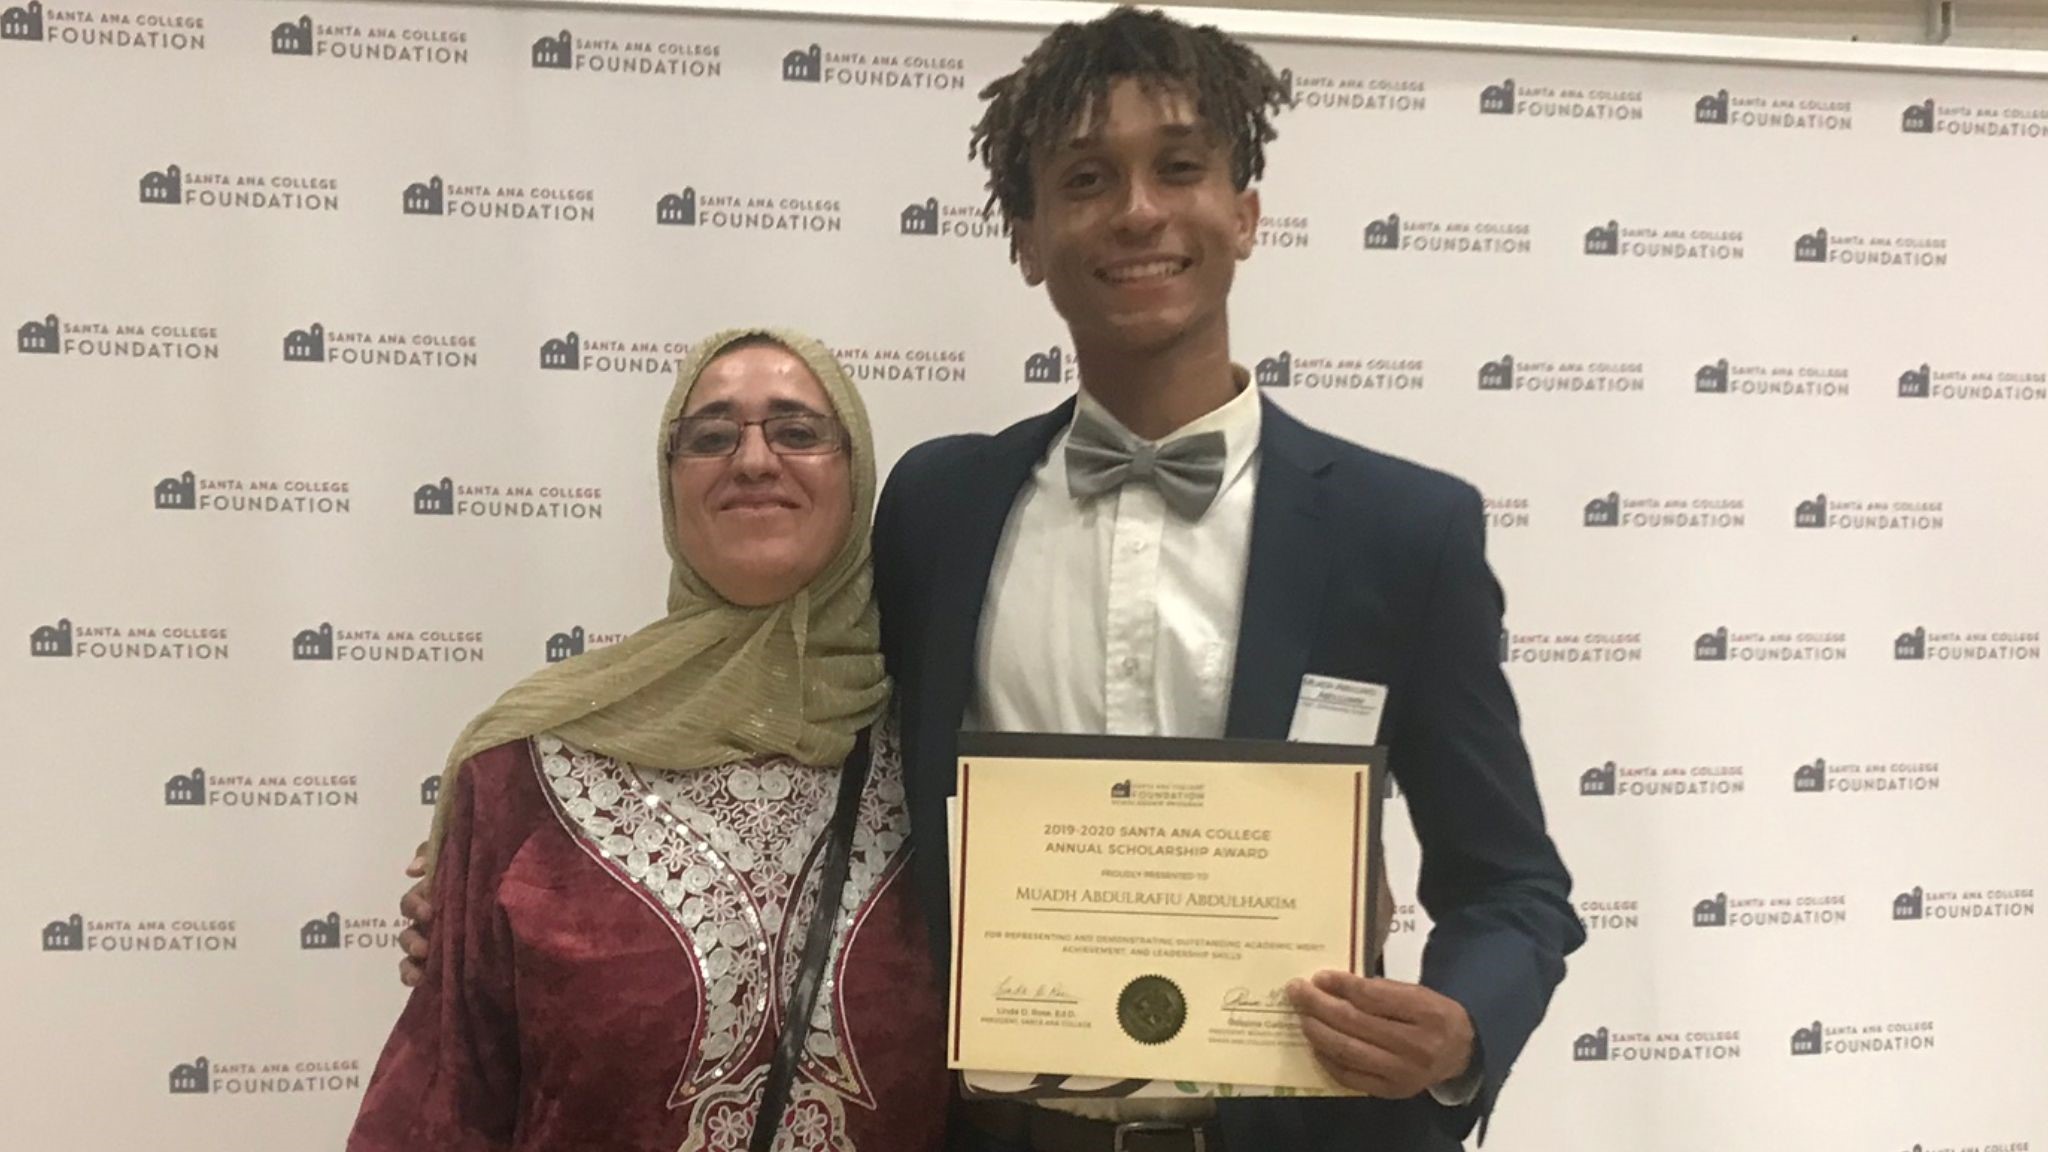 Scholarship Recipient Muadh Abdul Hakim and his mother